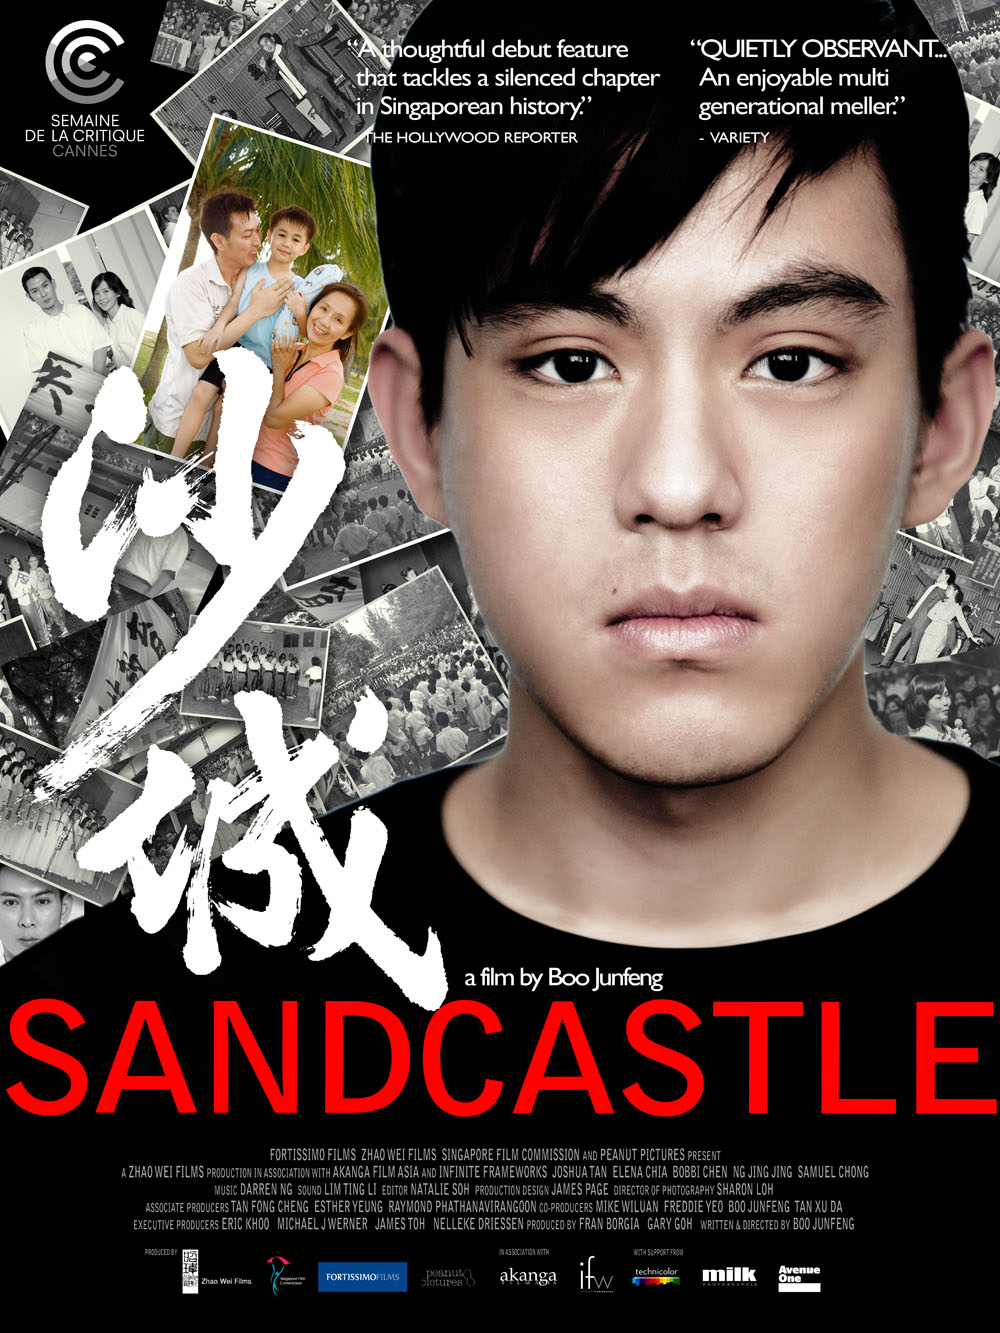 The Sand Castle movie